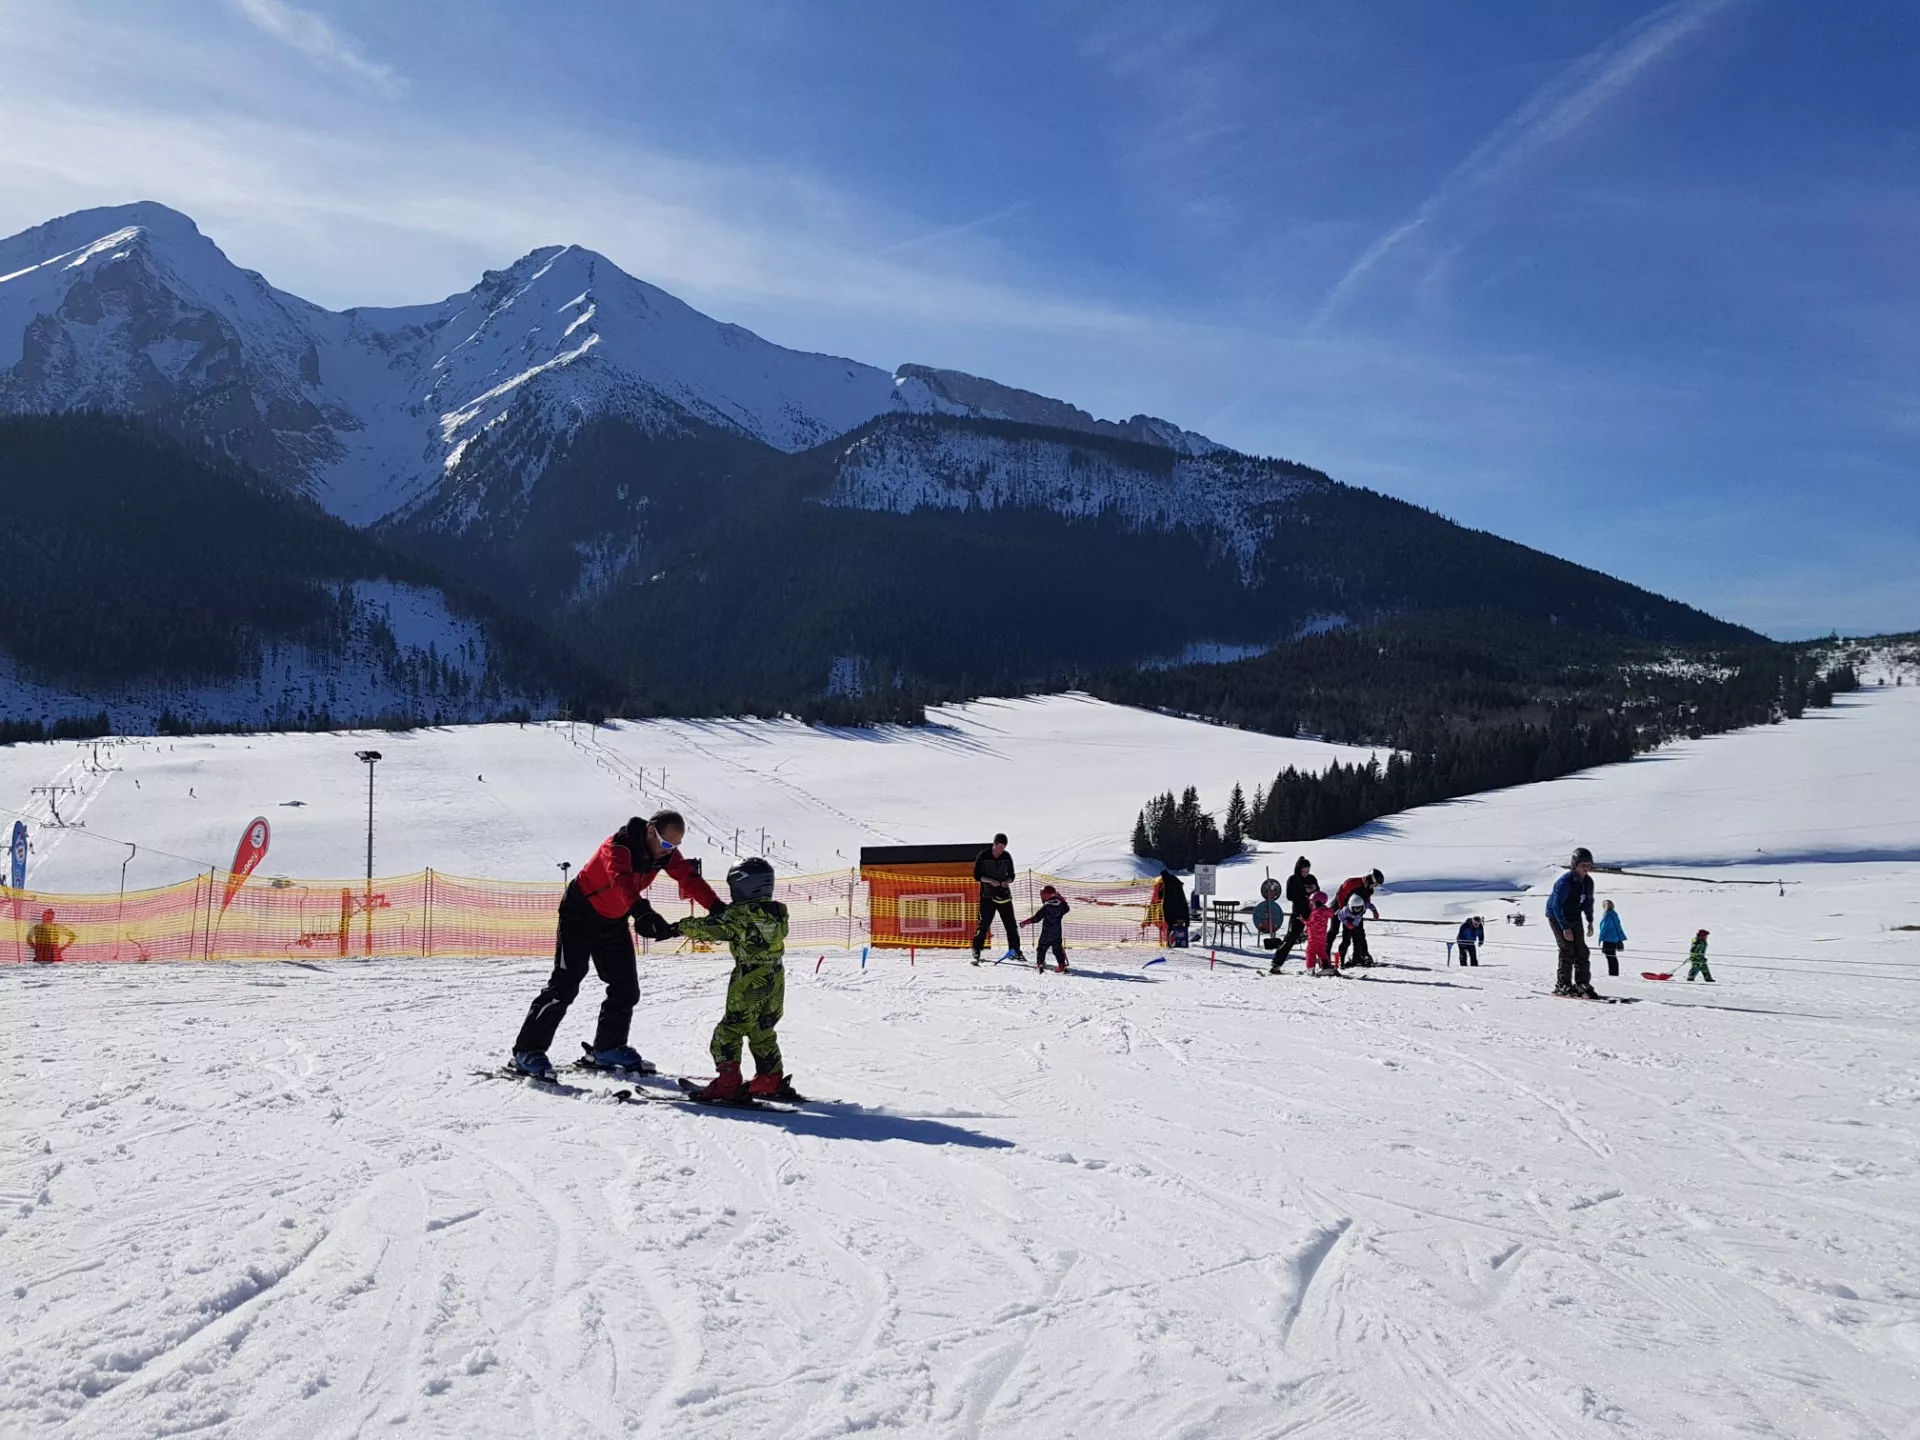 Skicentrum Strednica in Slovakia, Europe | Snowboarding,Mountaineering,Skiing - Rated 4.6